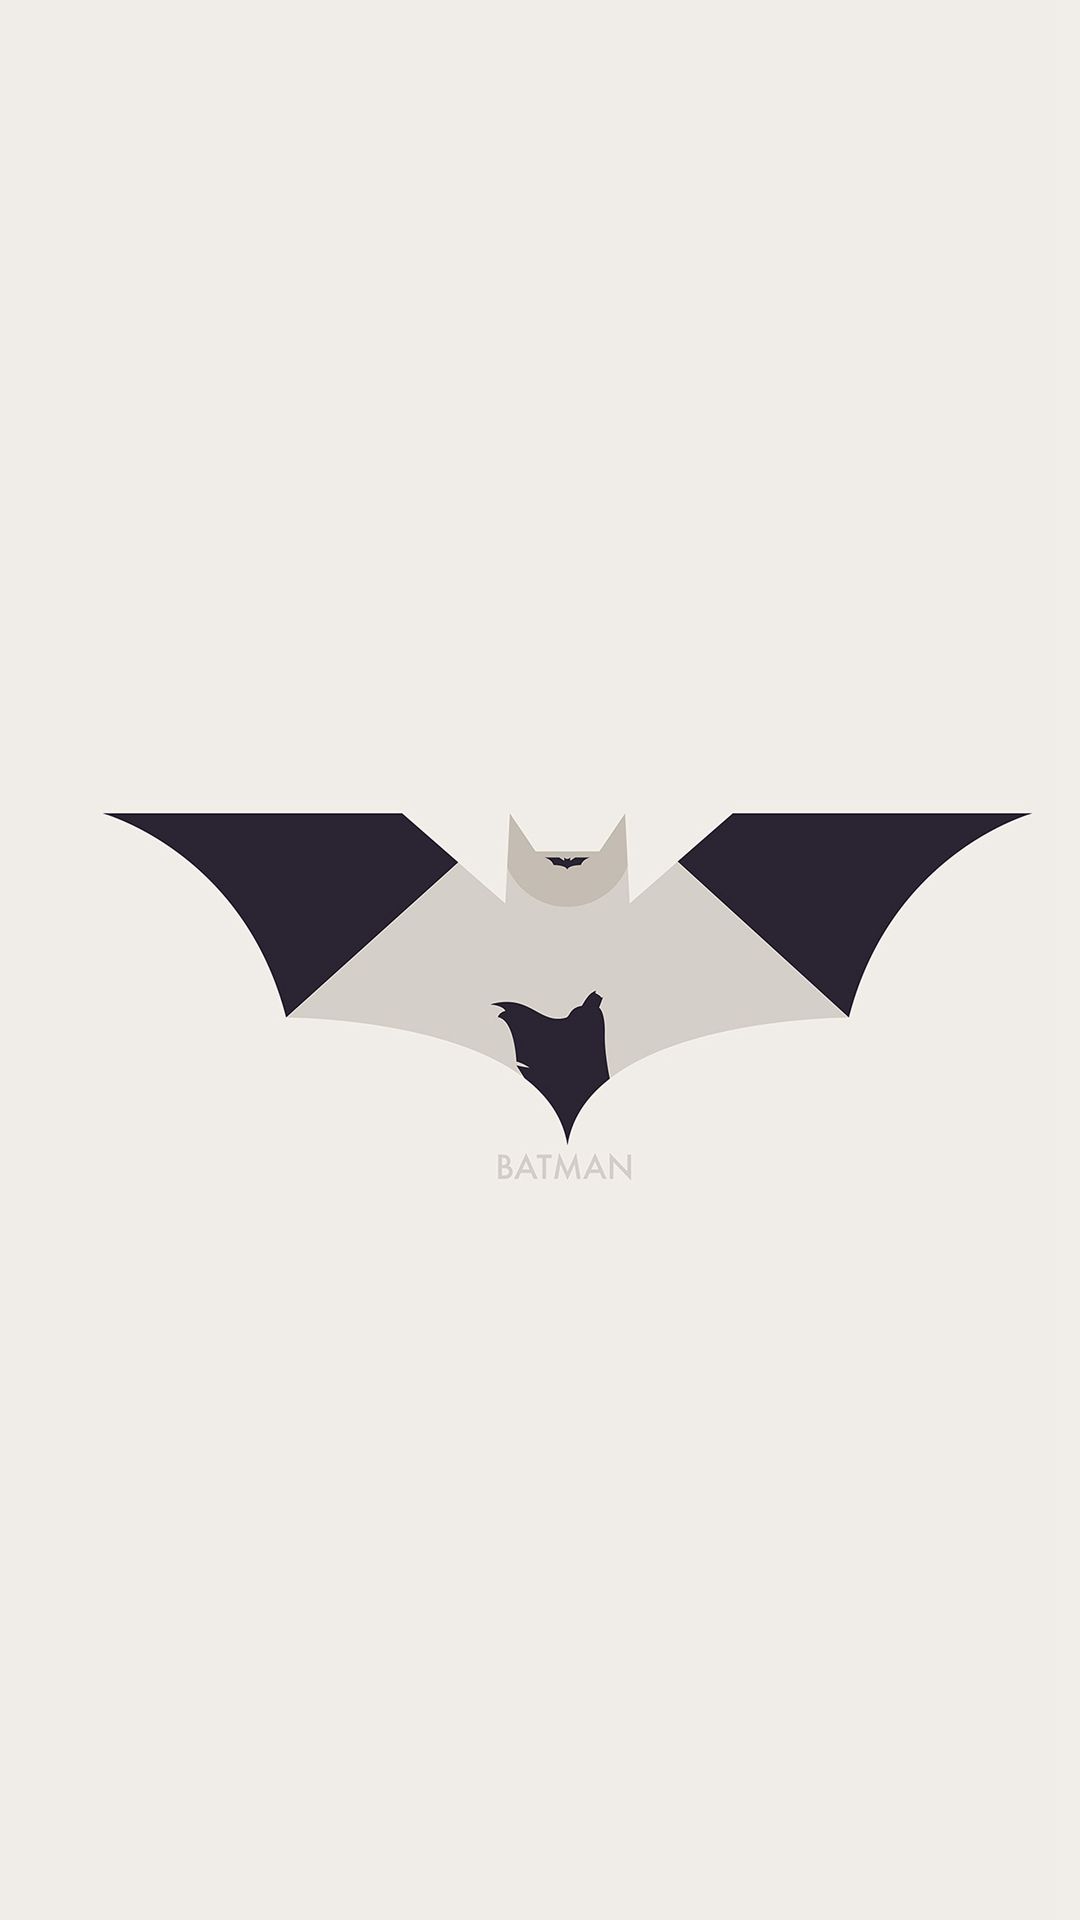 Art batman minimal logo illust iphone wallpaper download iphone wallpapers ipad wallpapers one